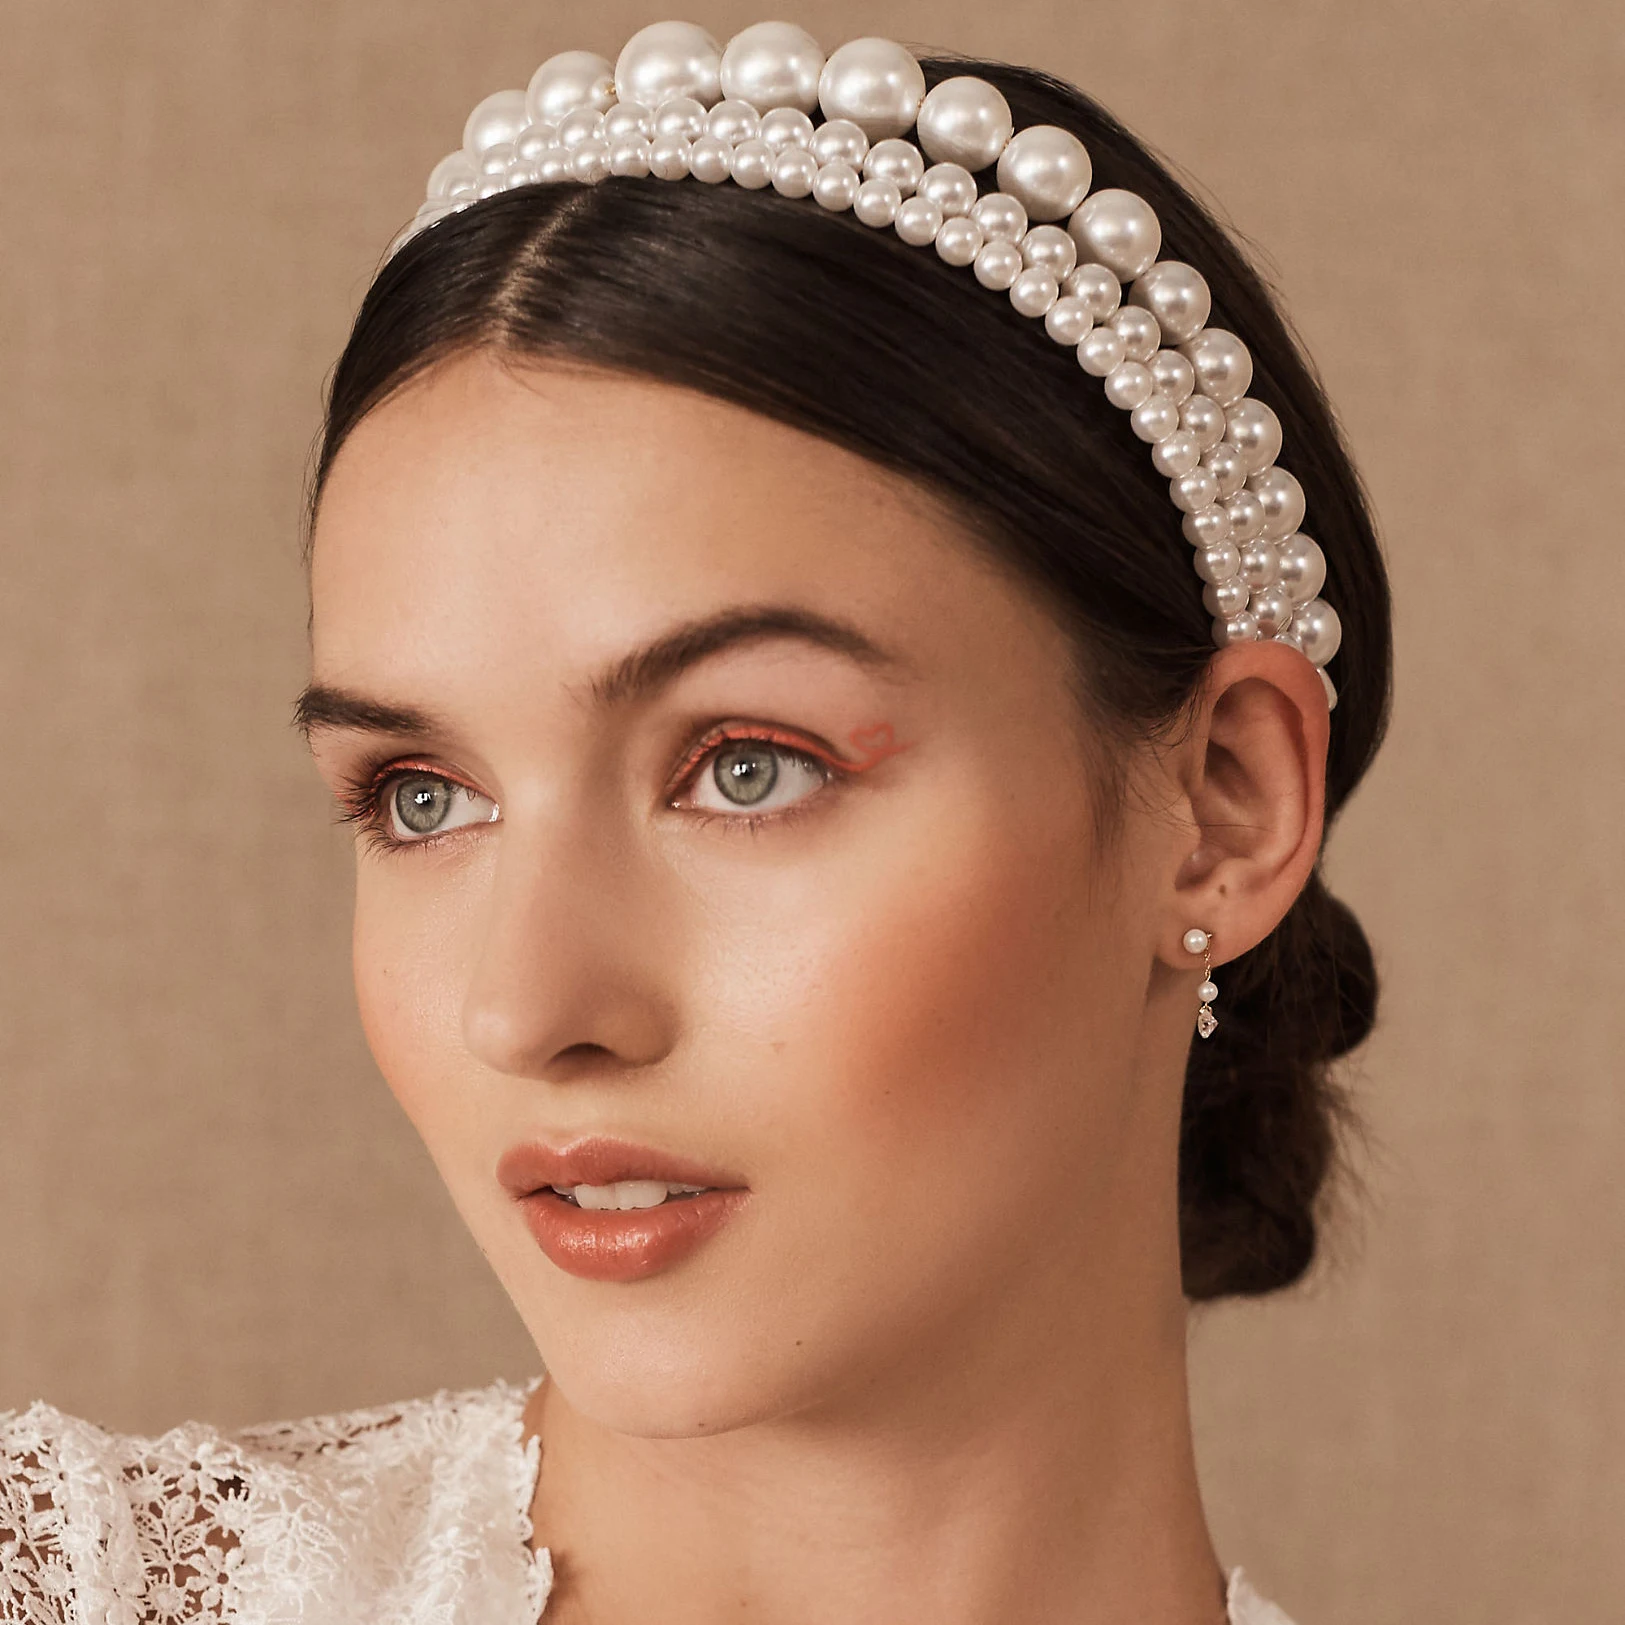 Women's Tie Headband Hairband Crown Pearls Wedding Hair Band Hoop Accessories 